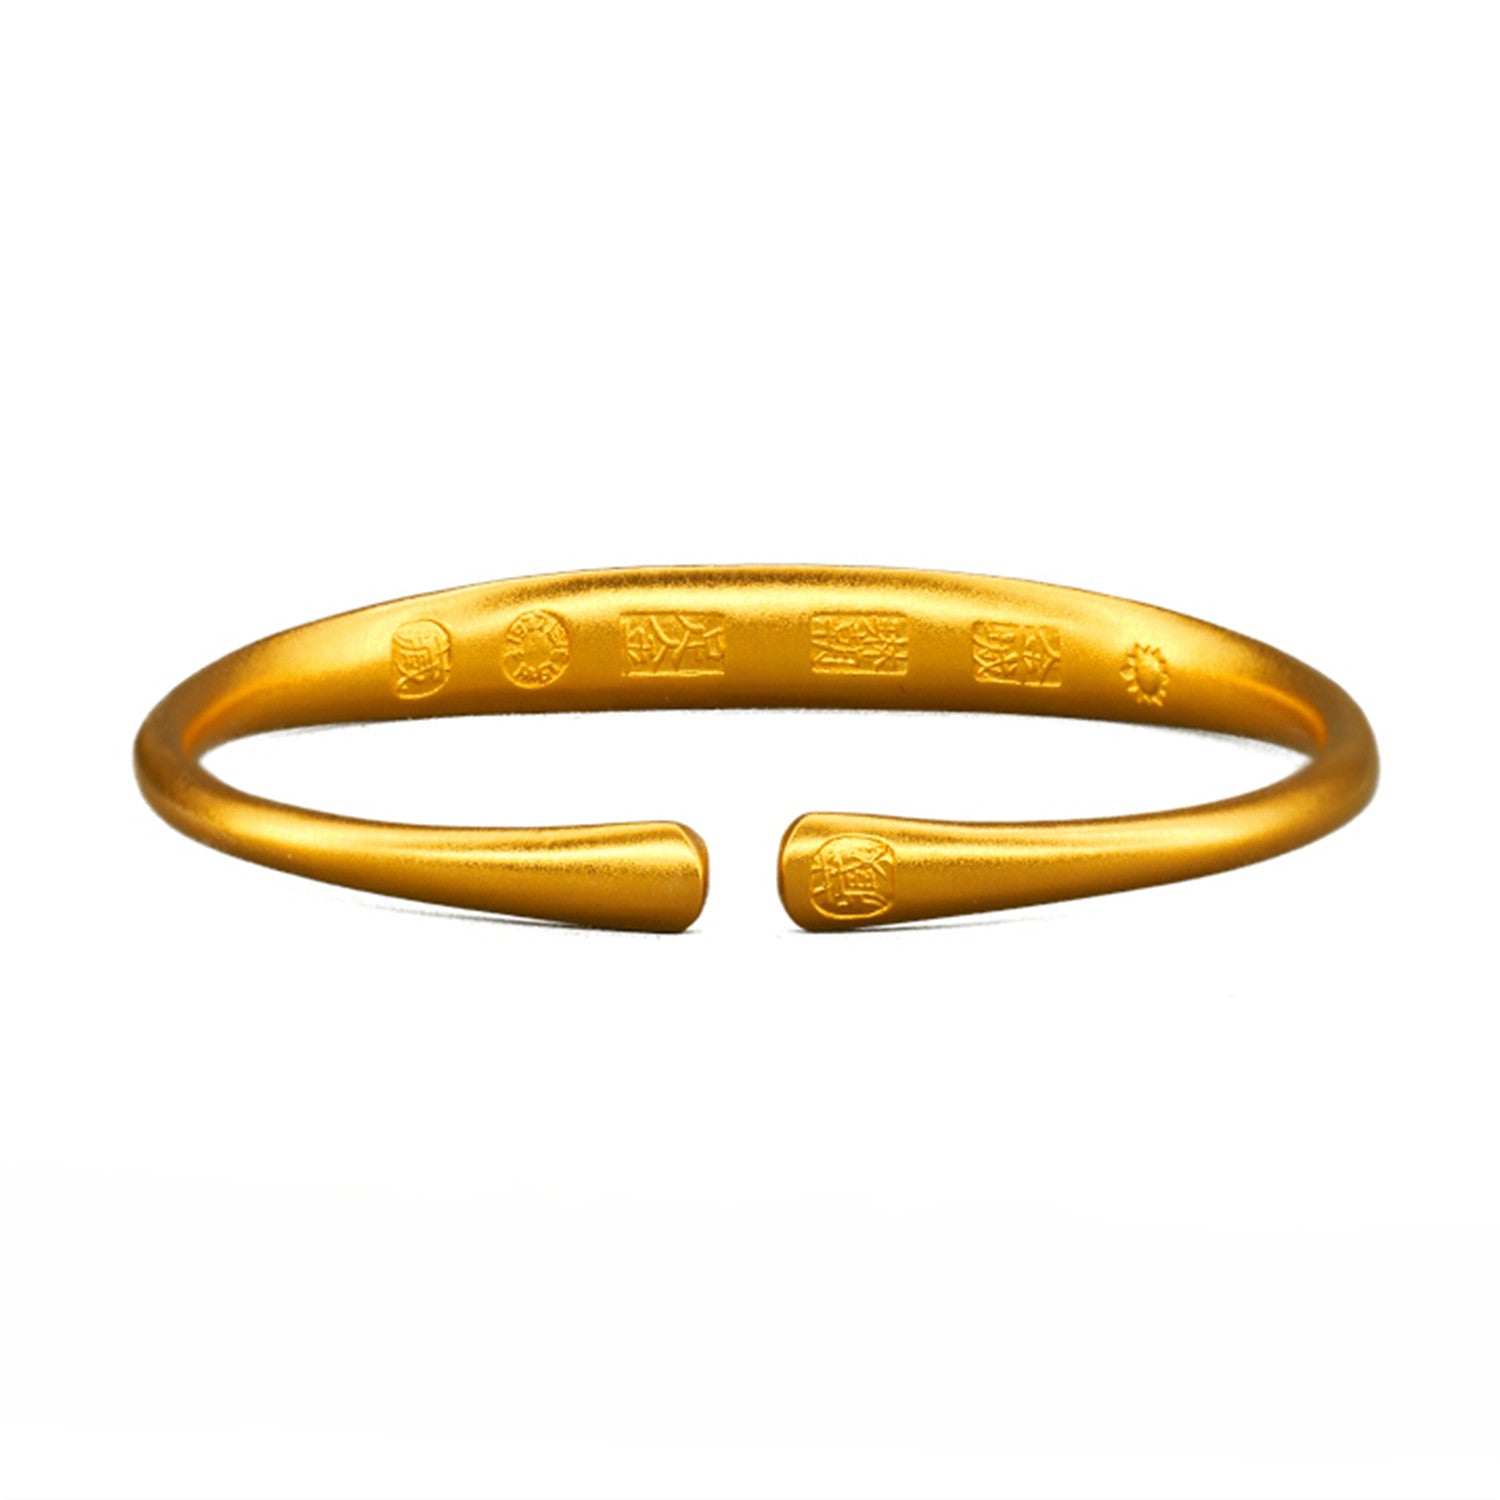 EVECOCO Full Gold Wedding Bracelet,For Female,Hand Forging Simplicity Fashion,45g